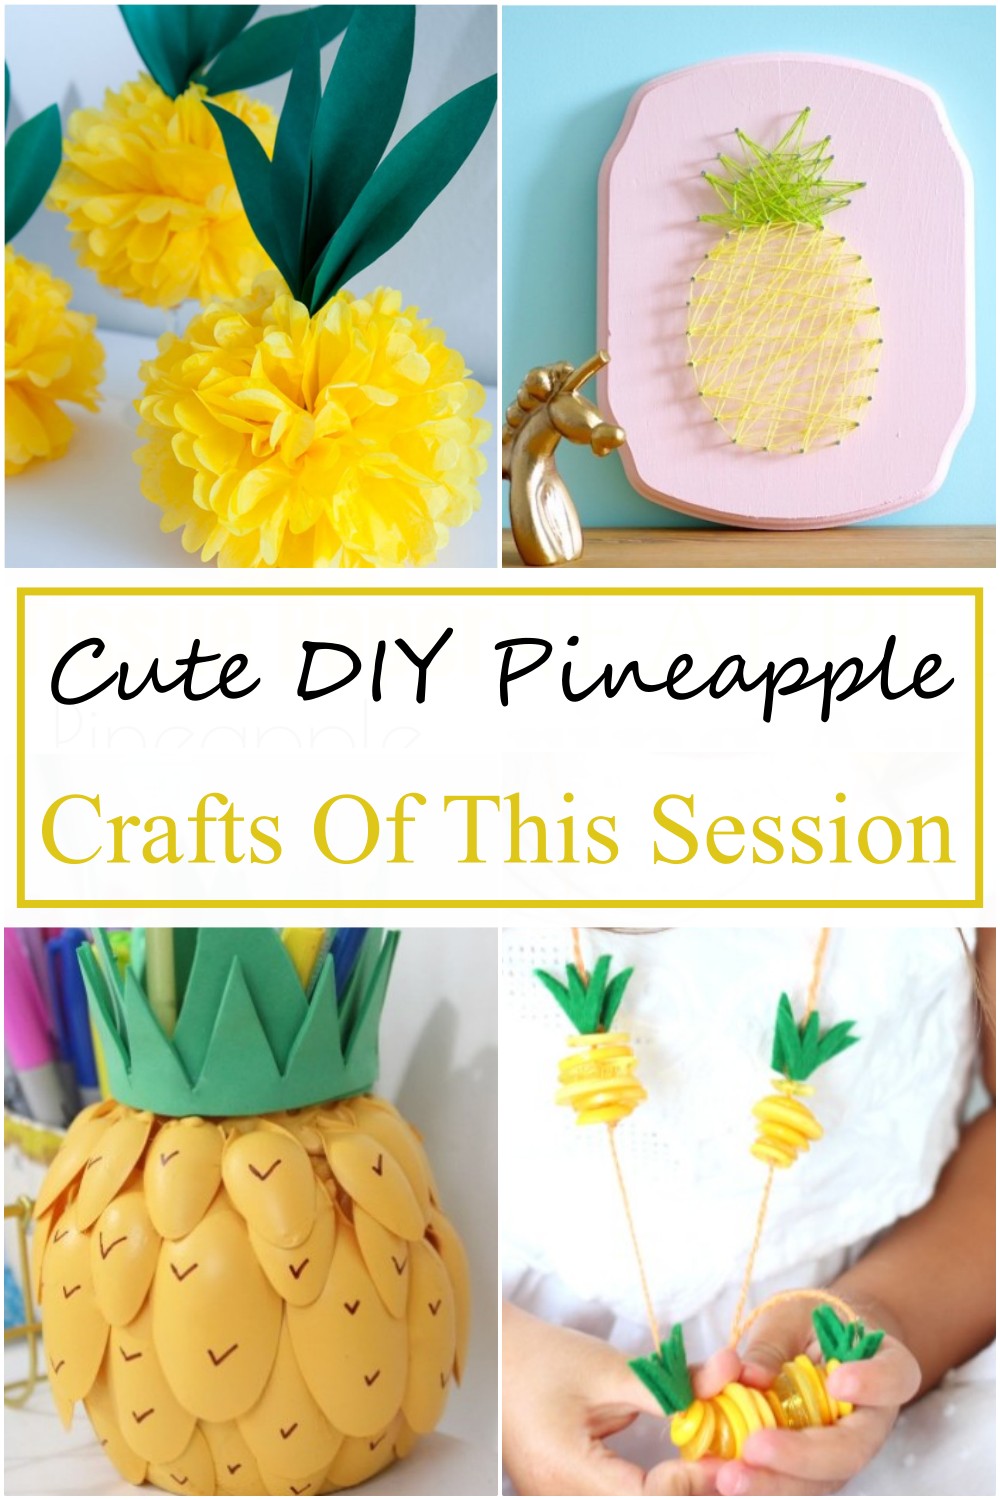 DIY Pineapple Crafts